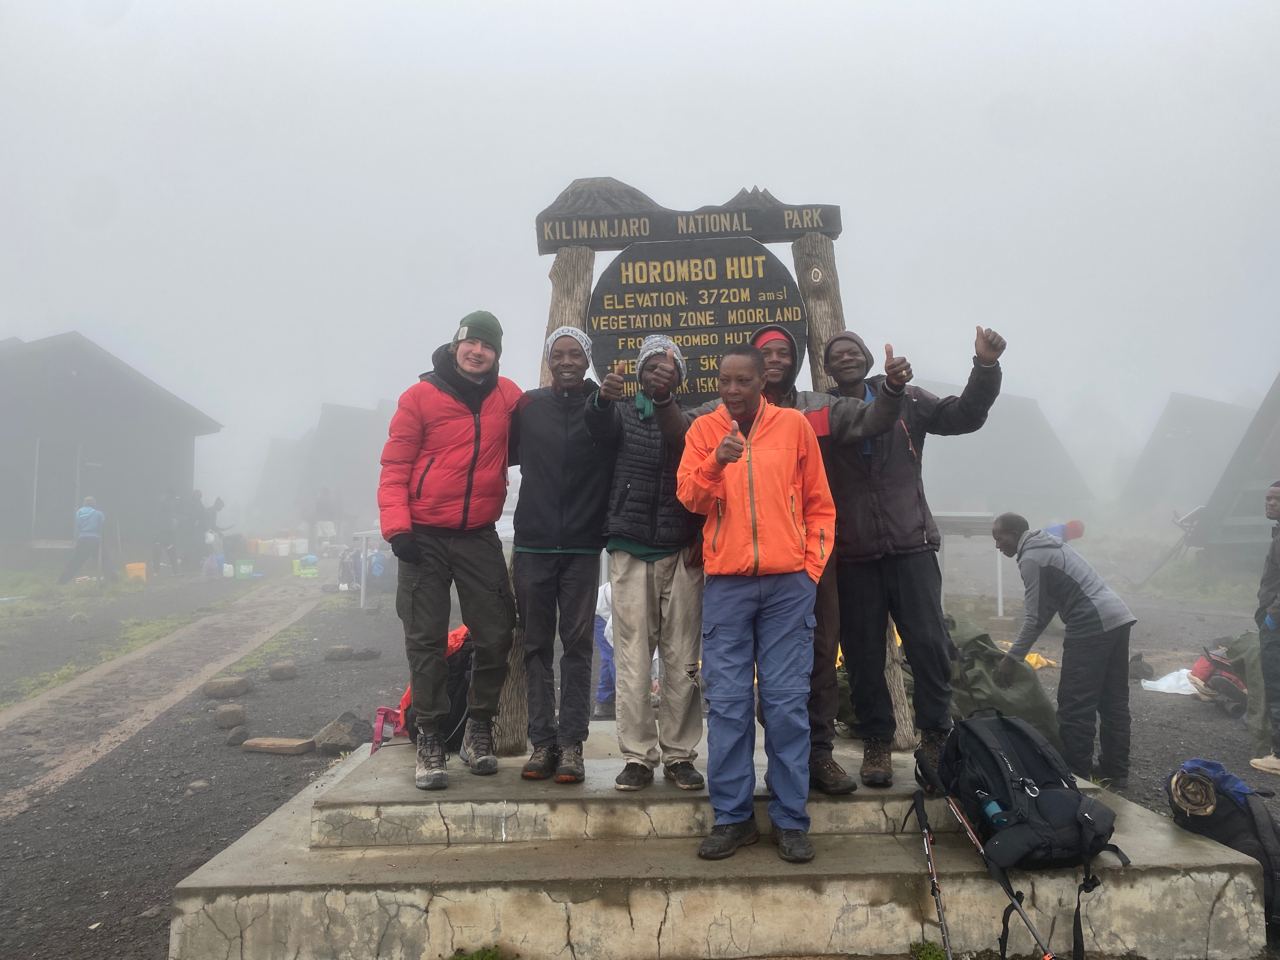 Мастер гостеприимства покорил Килиманджаро с флагом главного туристического конкурса страны - фото 2